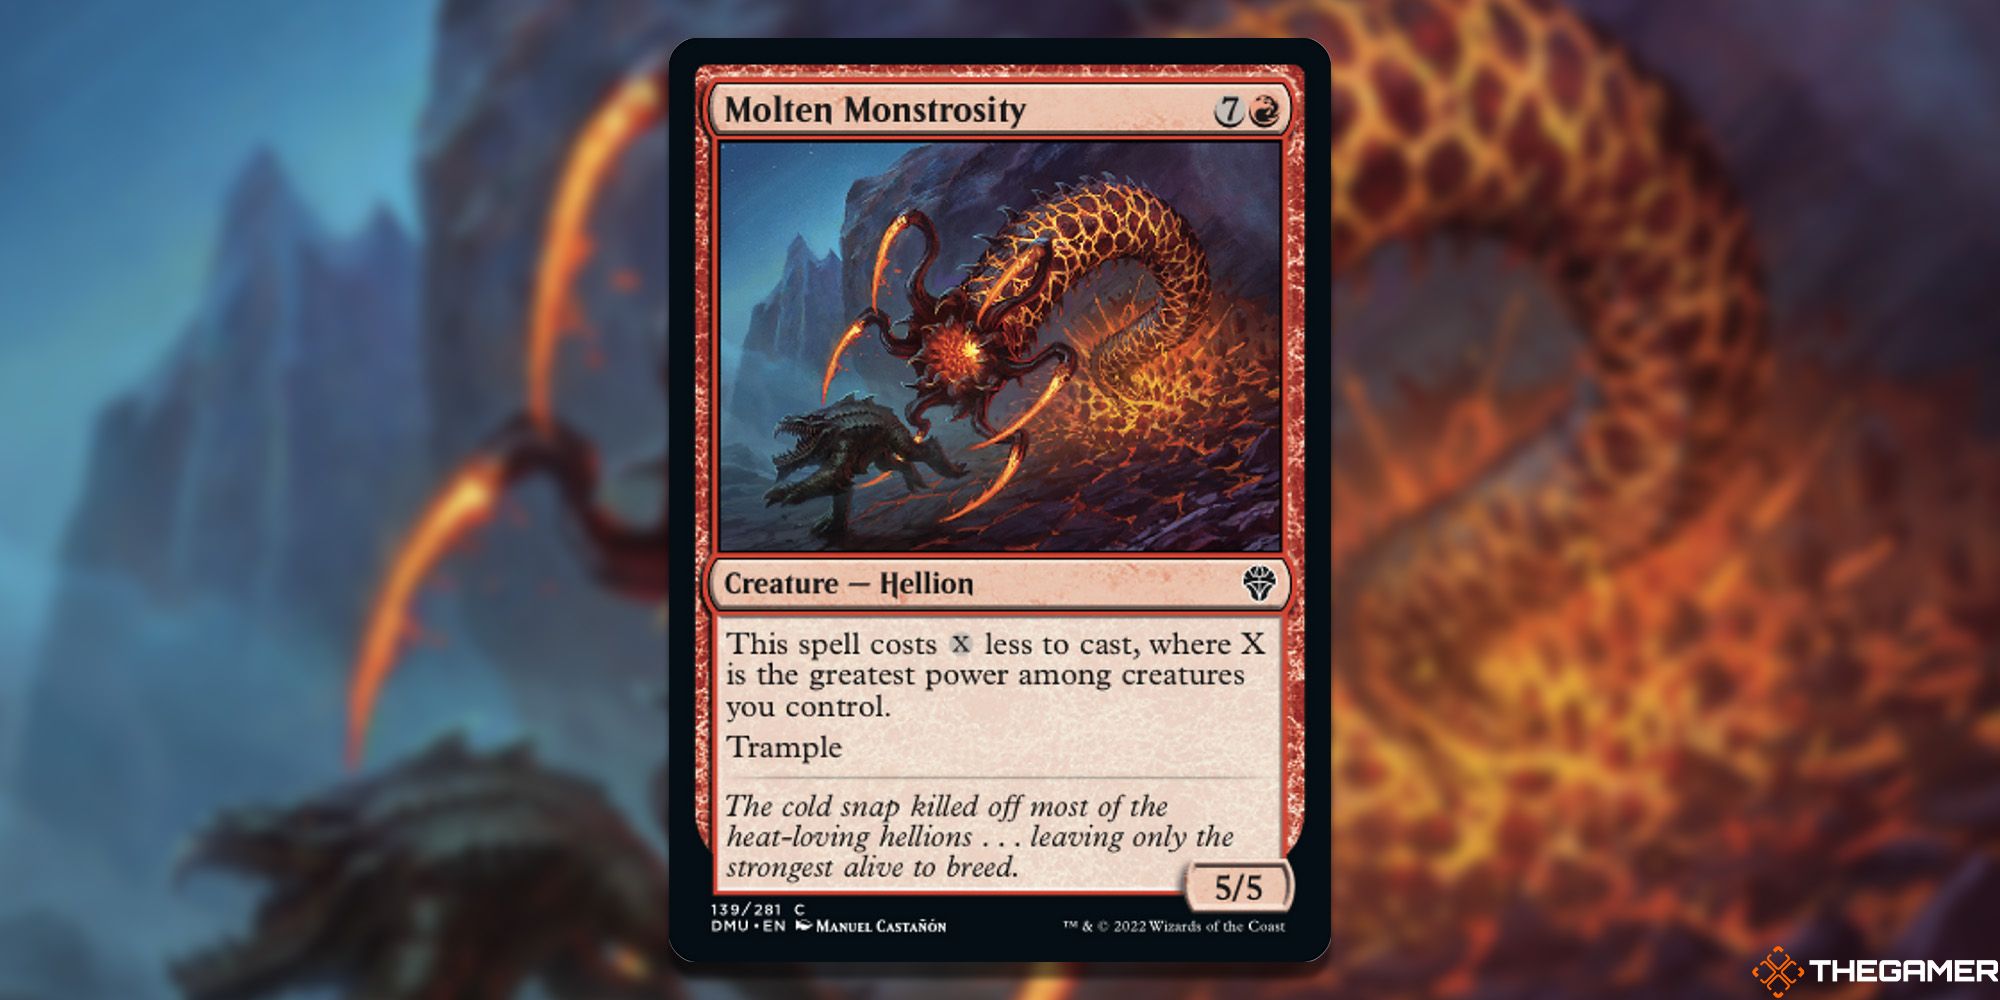 Molten Monstrosity card image.